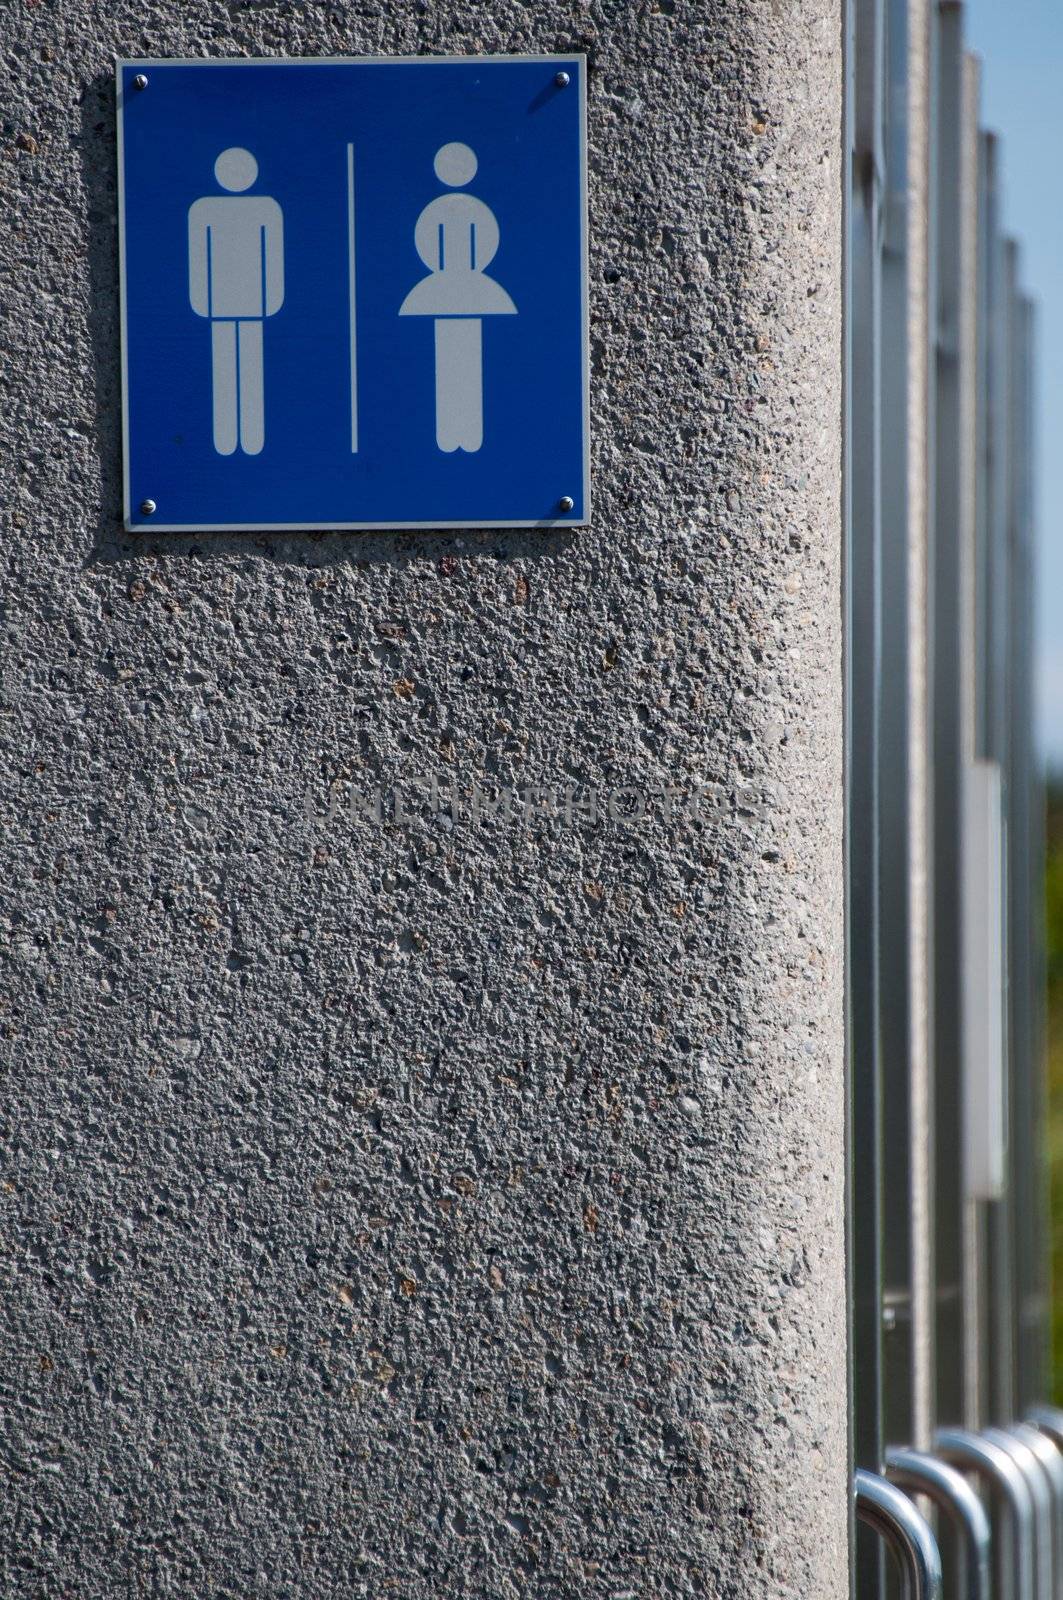 Public toilets by franky242